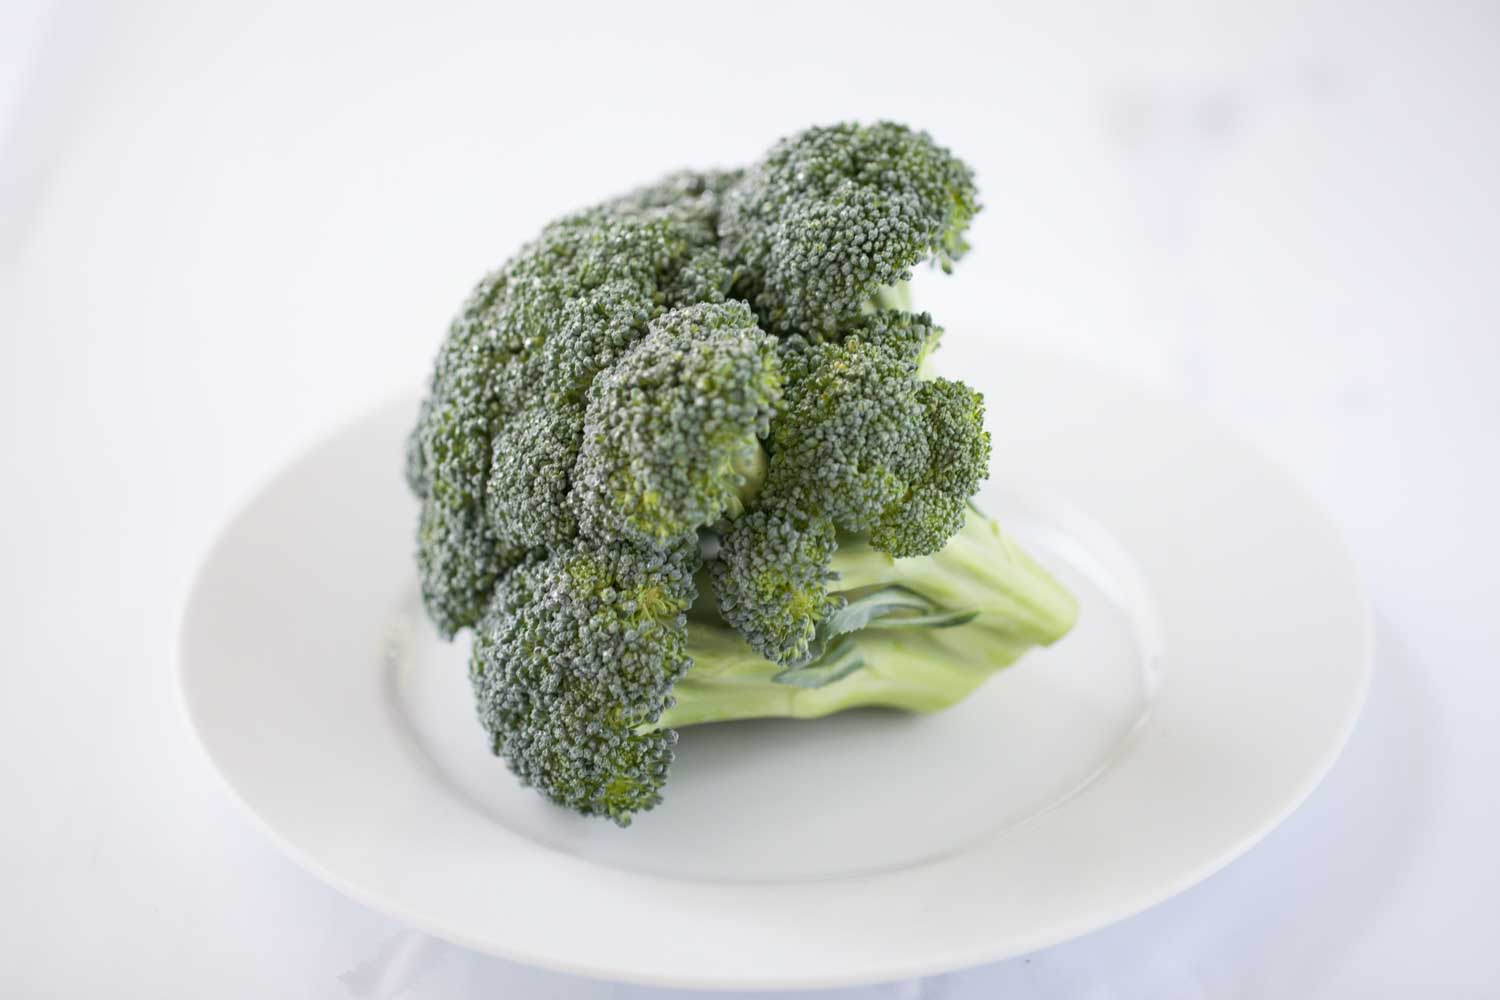 A stalk of broccoli on a plate